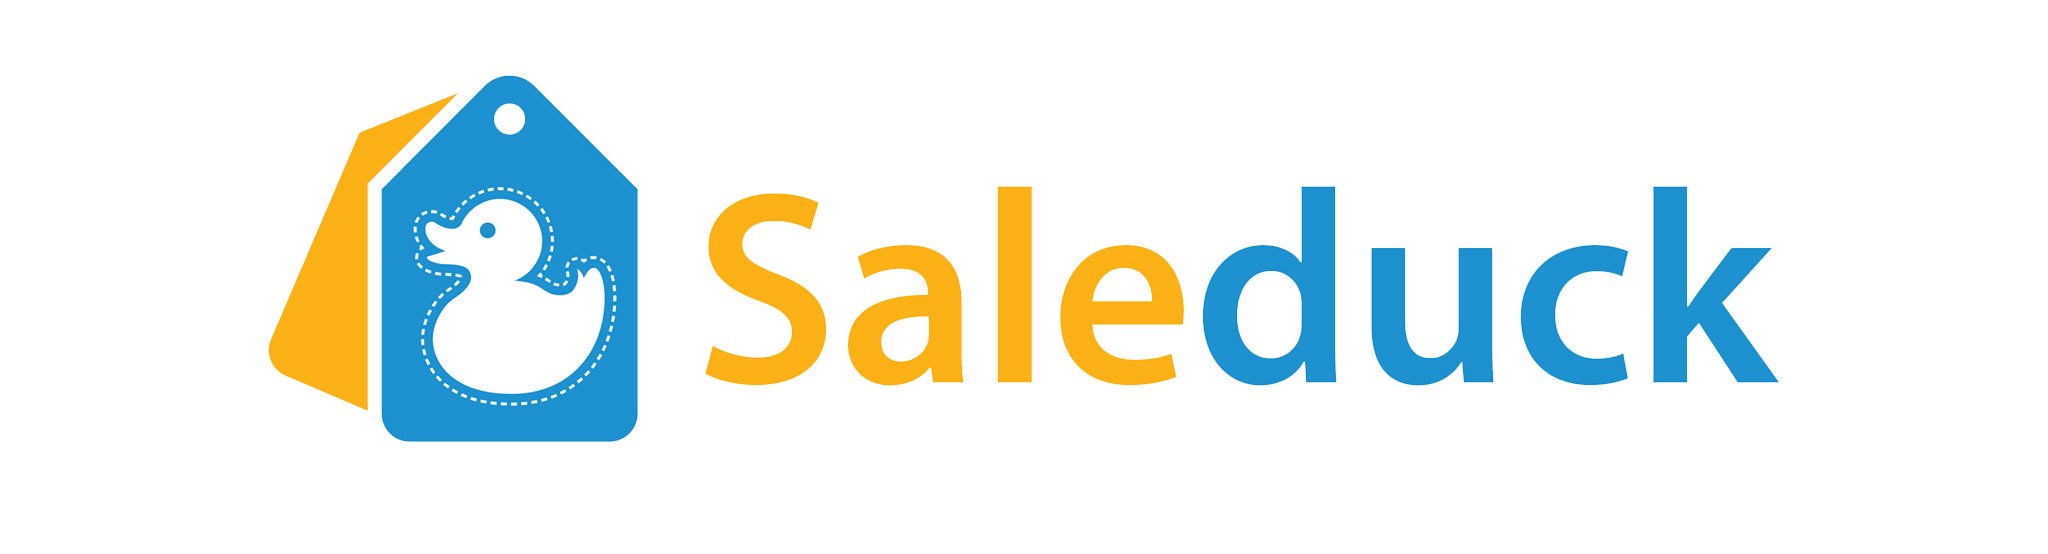 Saleduck logo 3